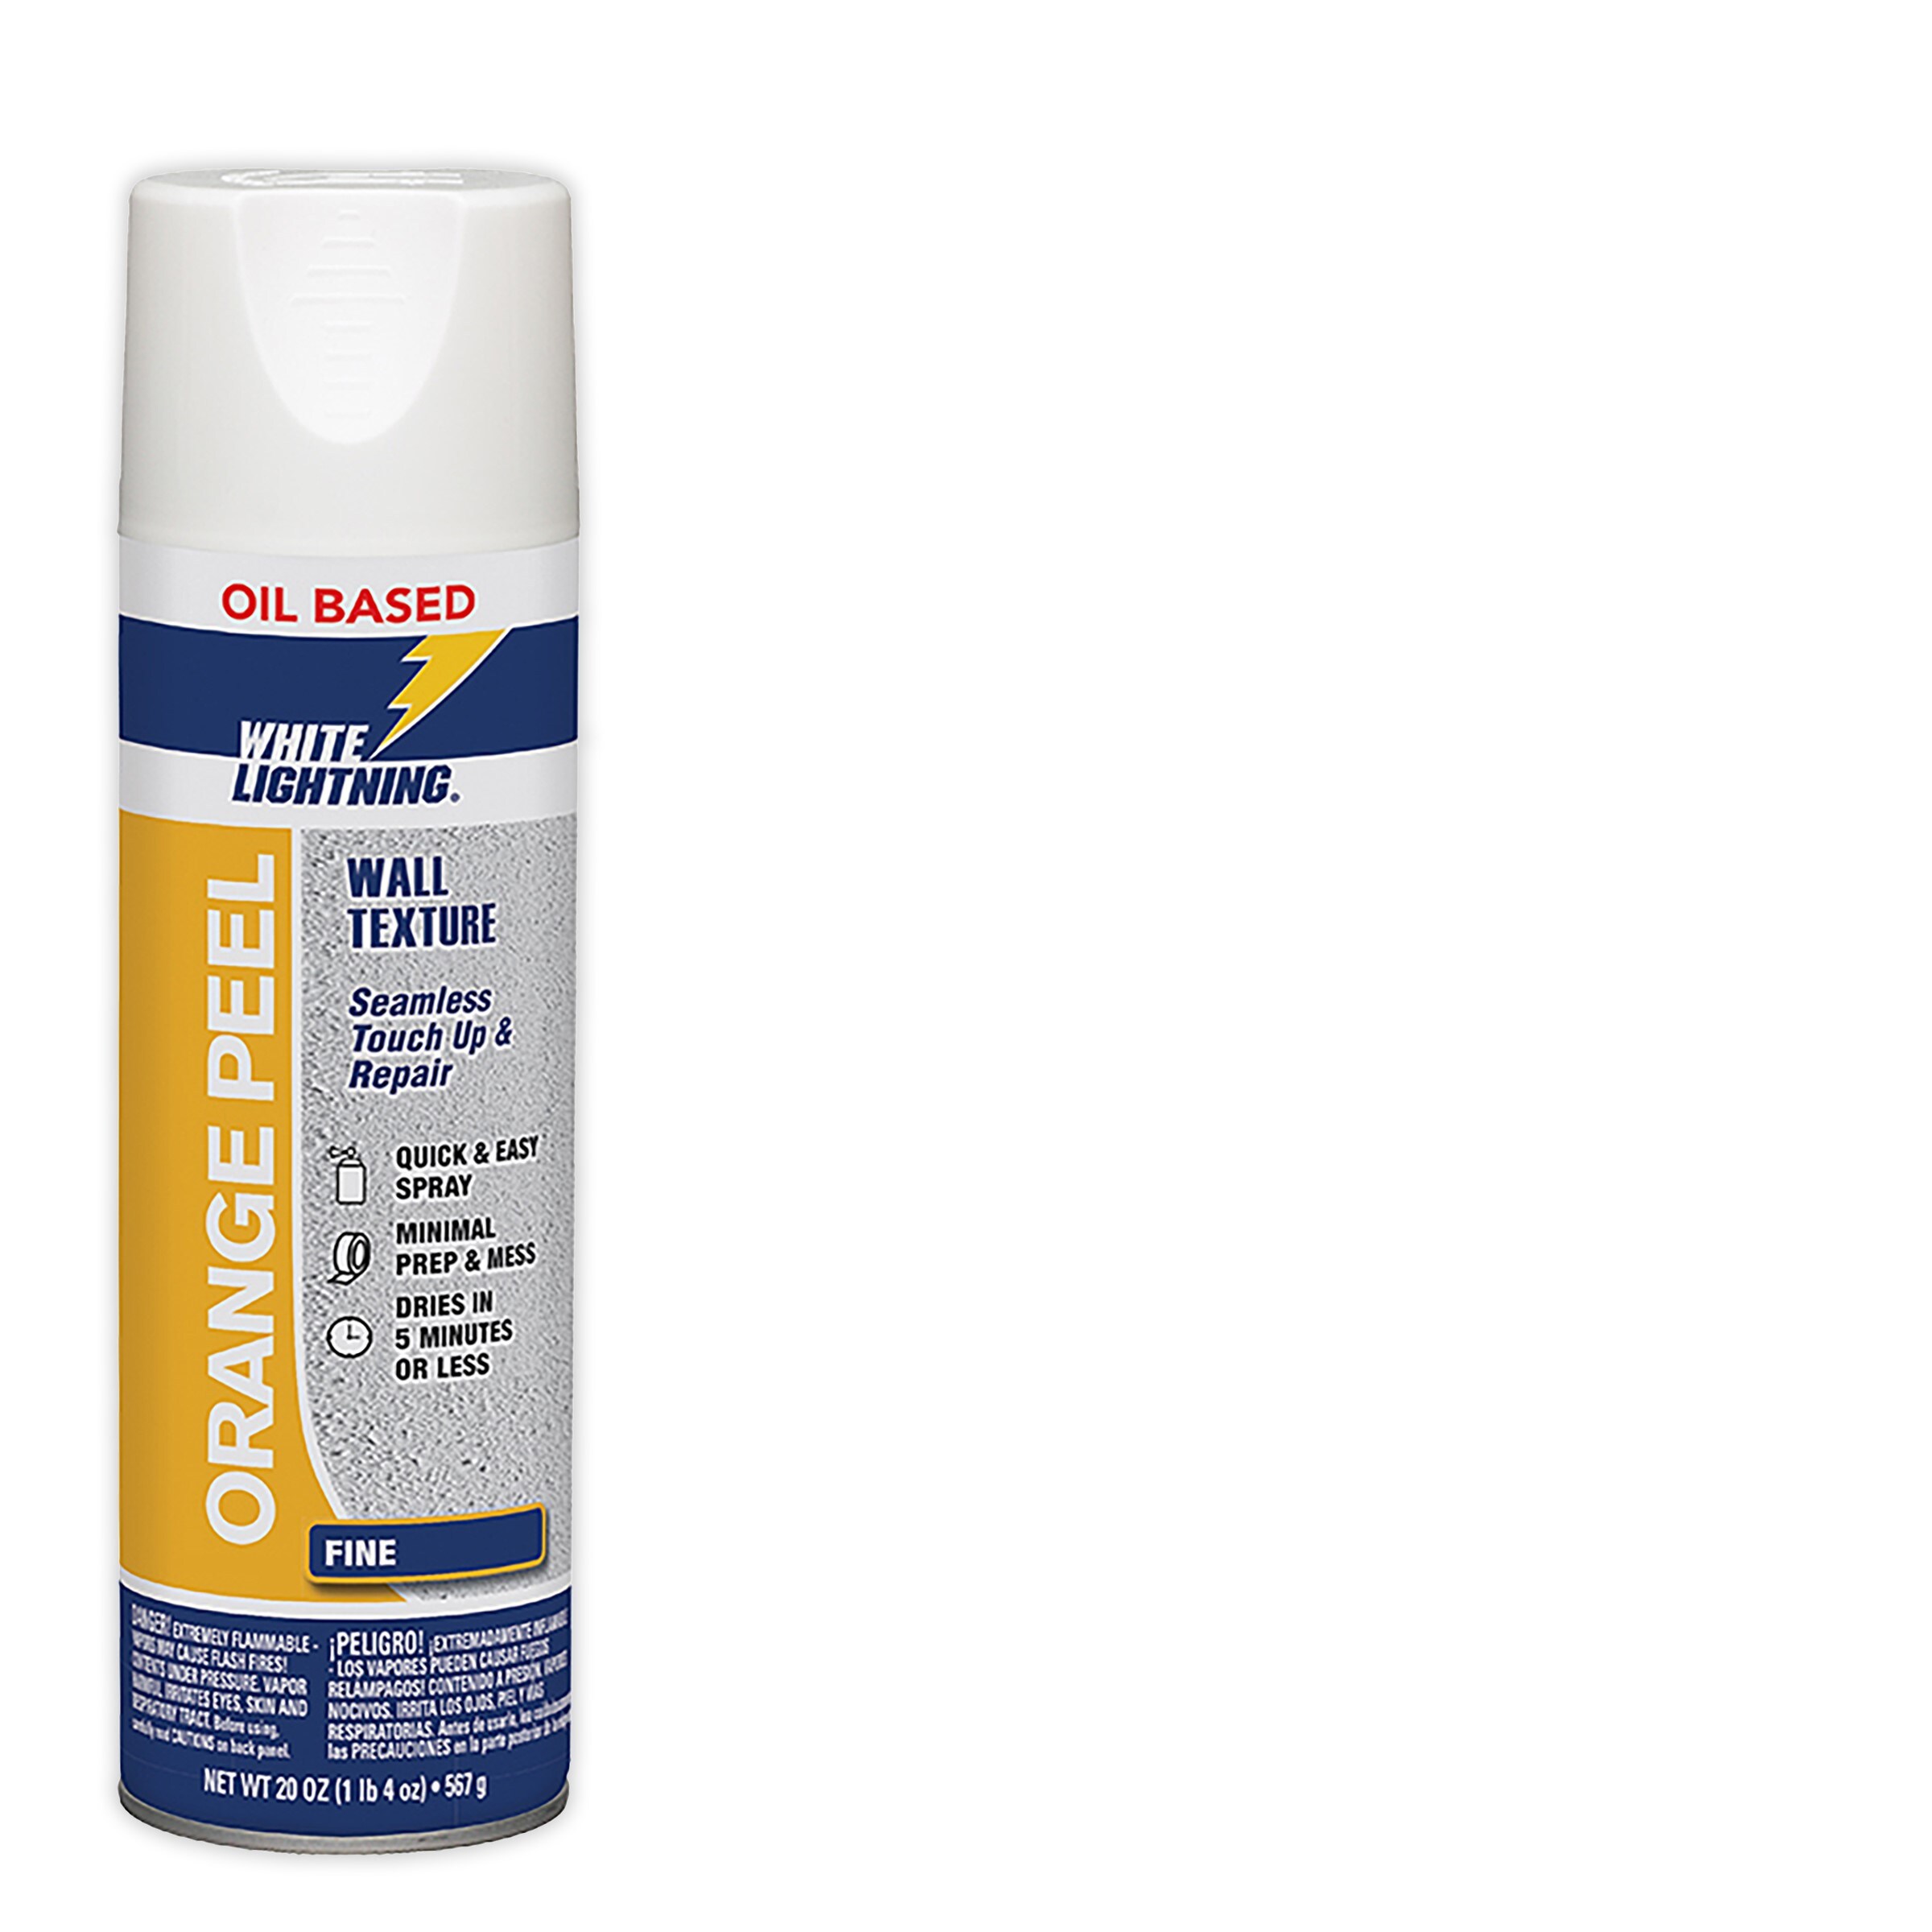 Homax Orange Peel Oil Based Drywall Spray Texture - 20 oz aerosol can